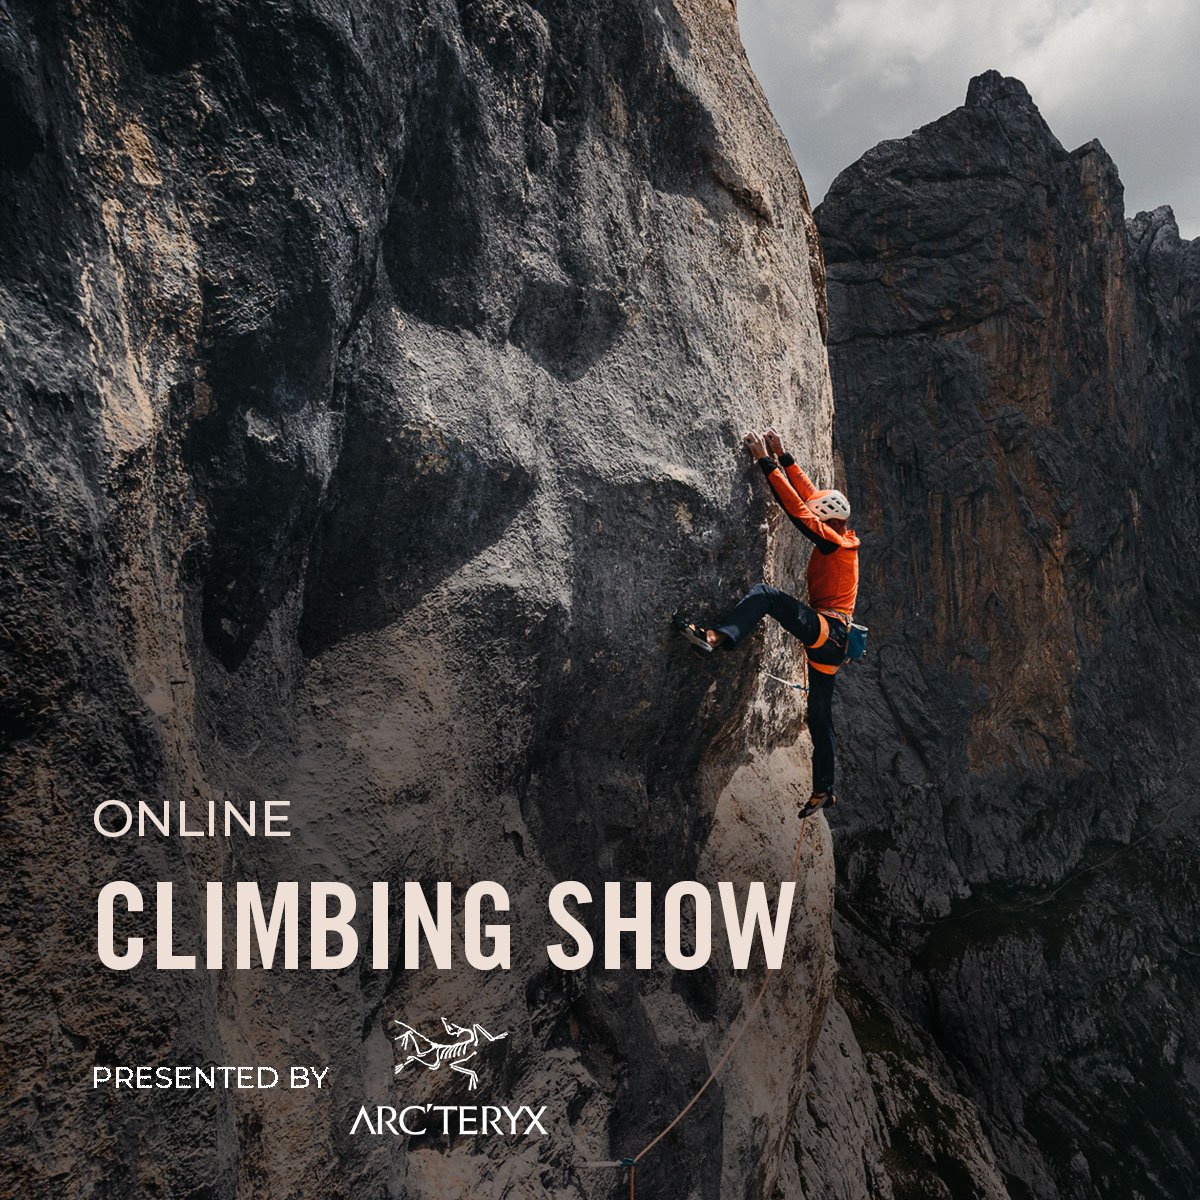 VIMFF Fall Series online climbing show arcteryx x